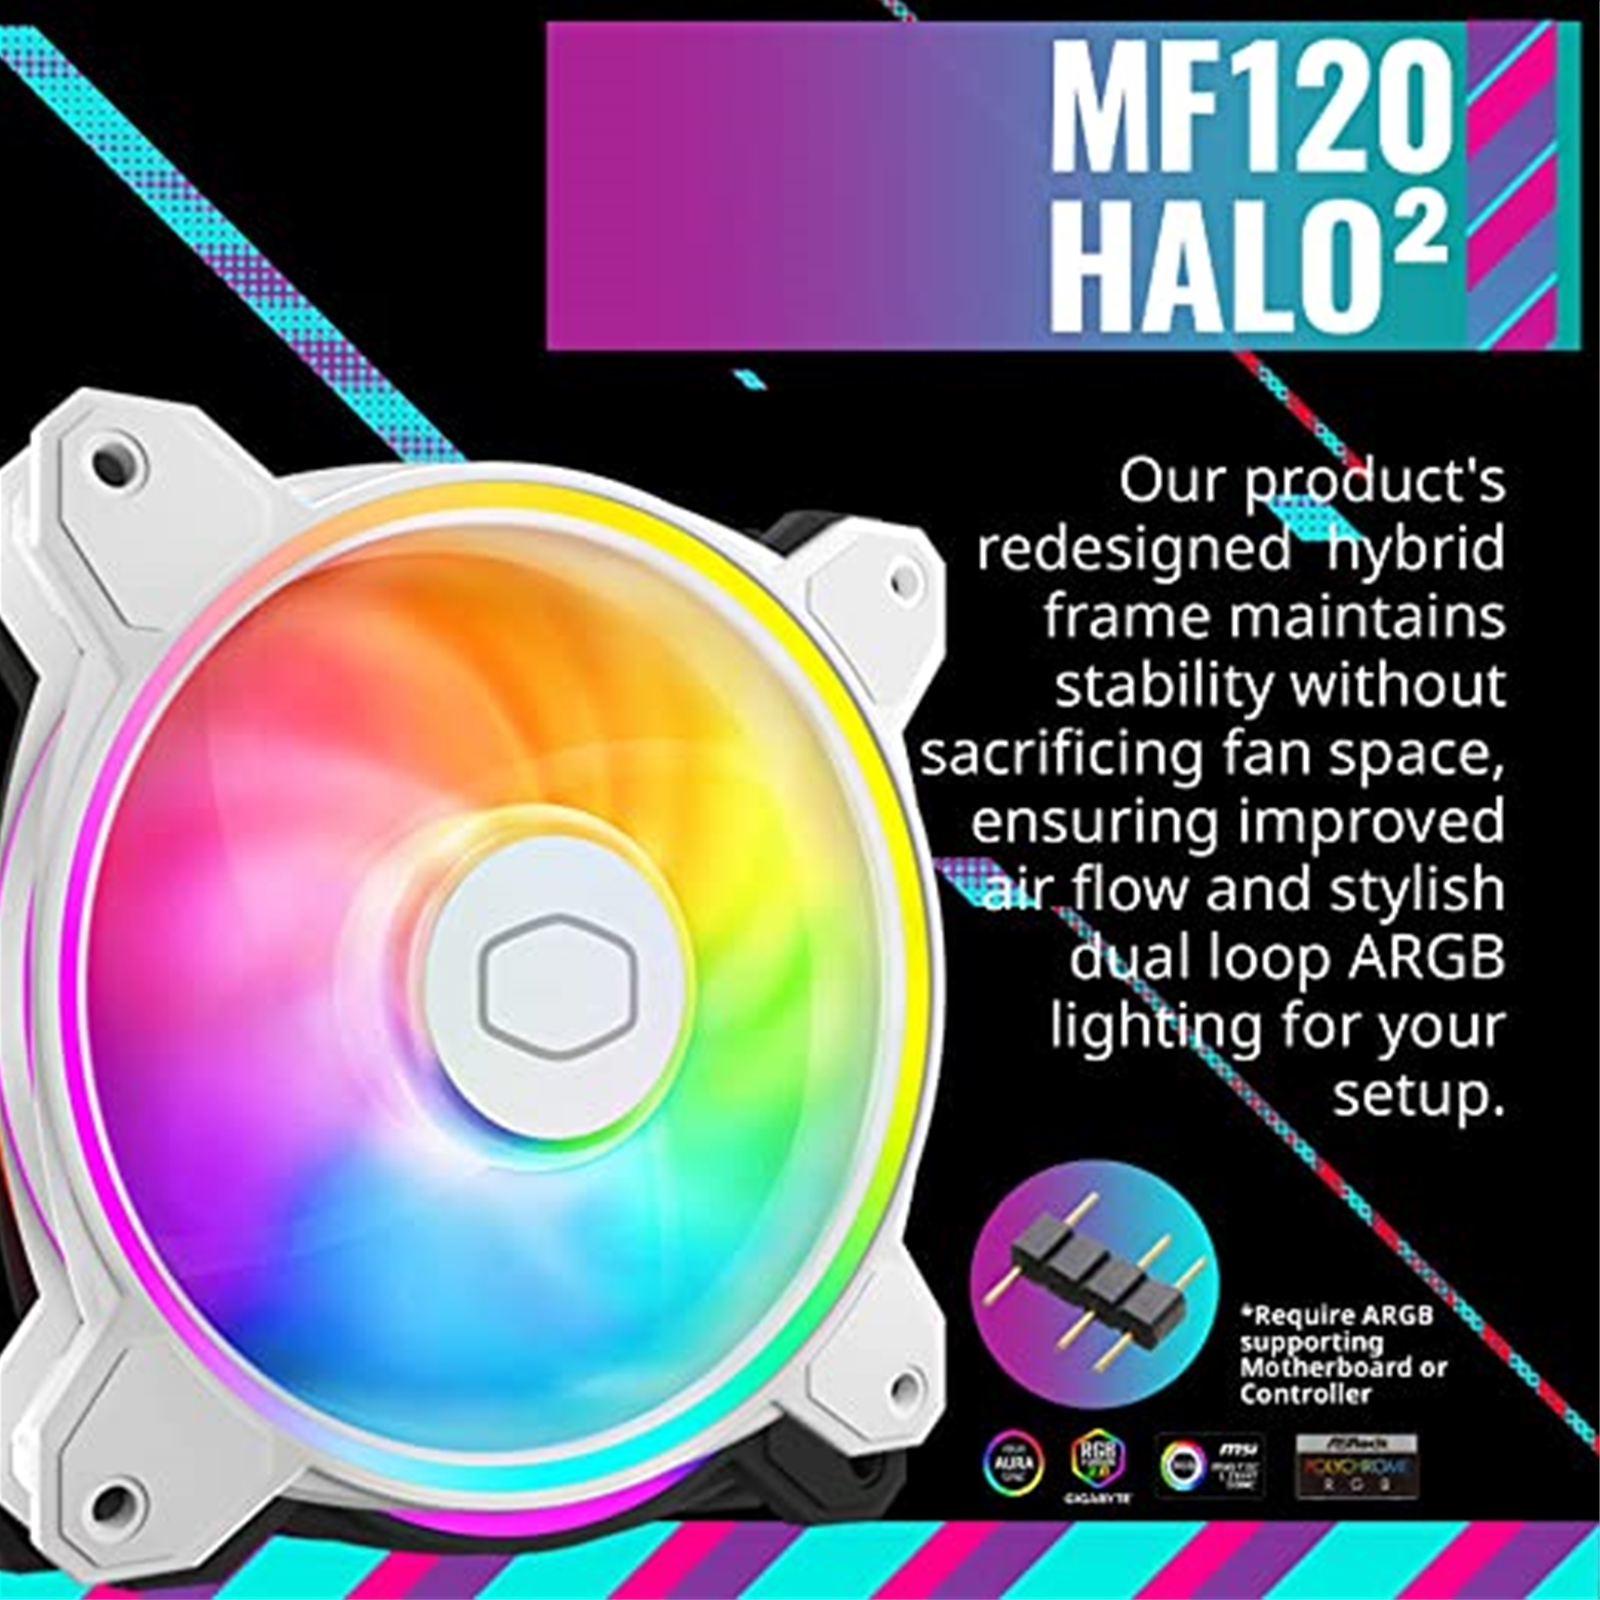 Cooler Master Hyper 212 Halo White Fan CPU Cooler, Universal Socket, 120mm PWM MF120 HALO2 ARGB Fan, 2050RPM, 4 White Pure Heat Pipes, Aluminium Fins, Addressable RGB Auto Detection, Upgraded Installation Brackets